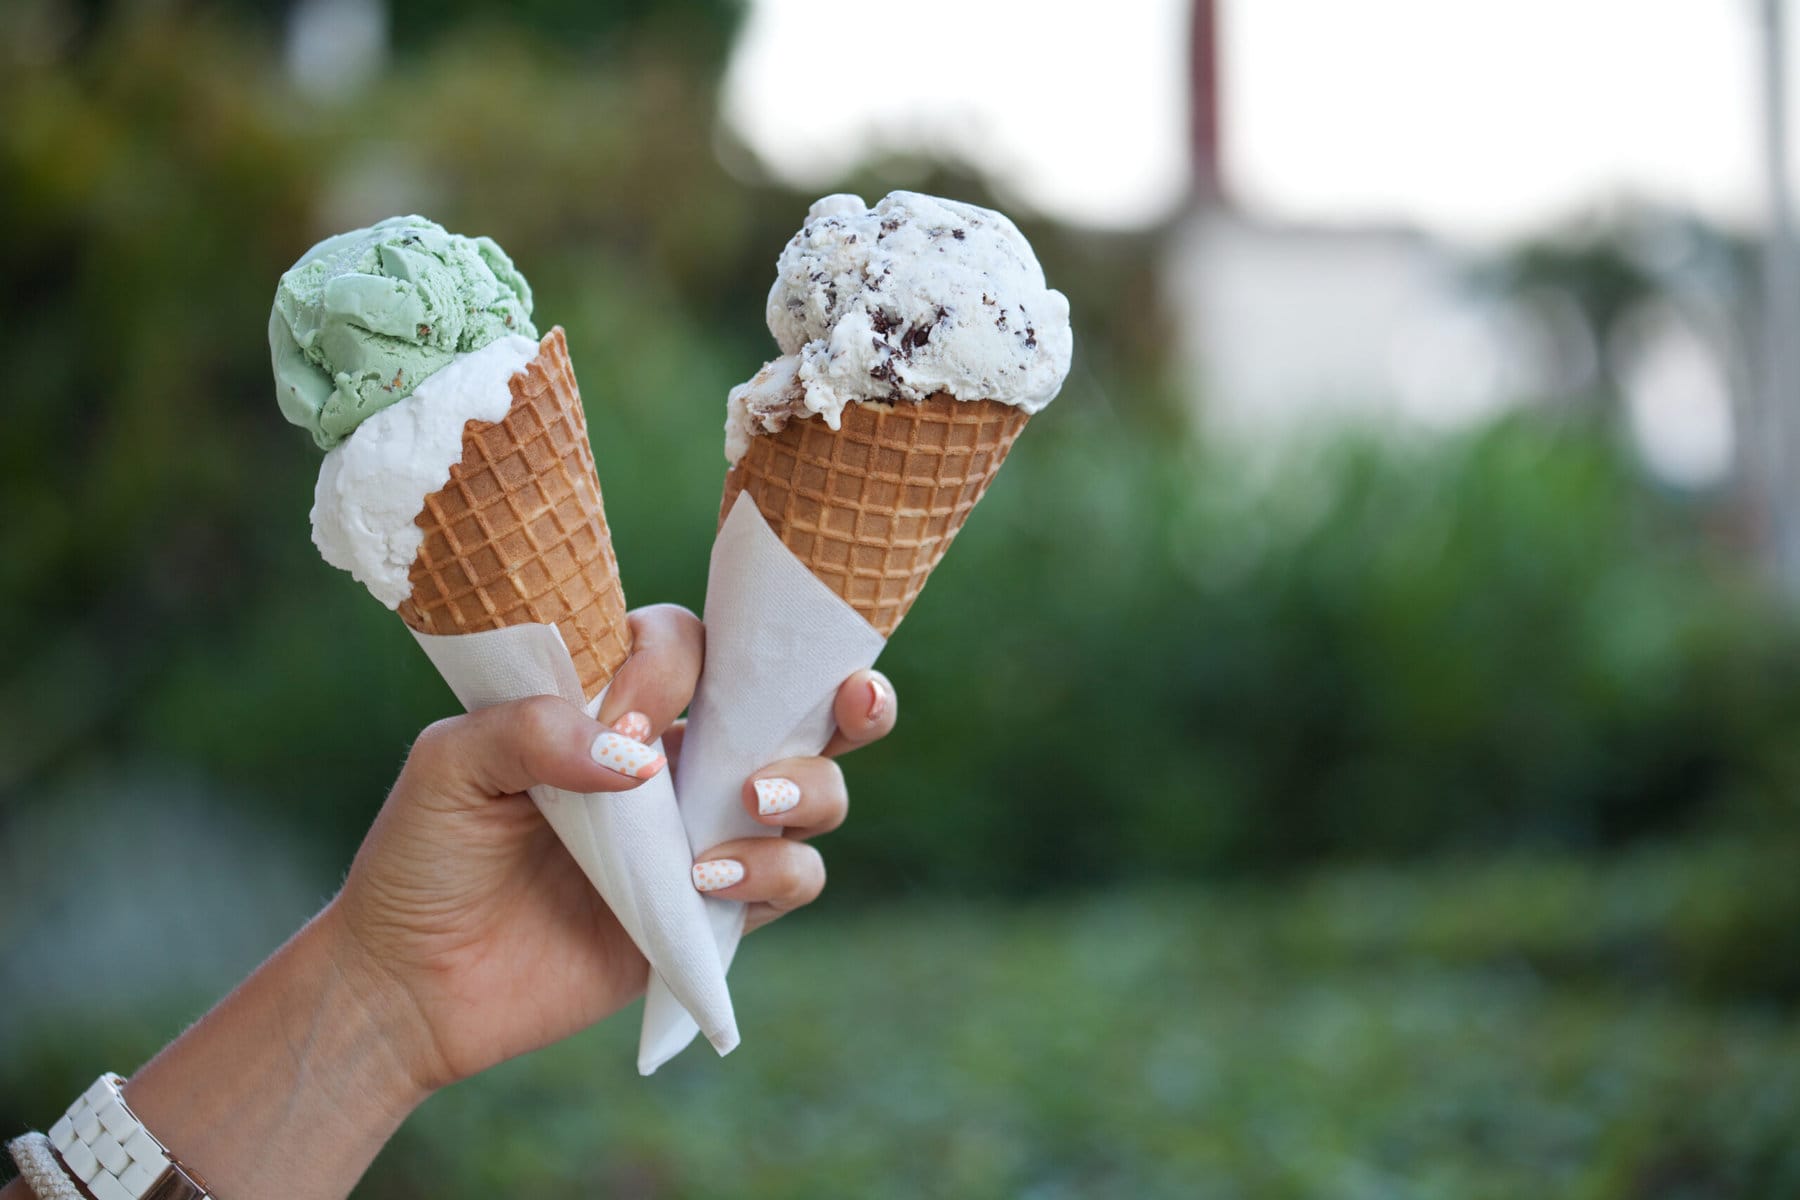 Two colorful ice cream cones